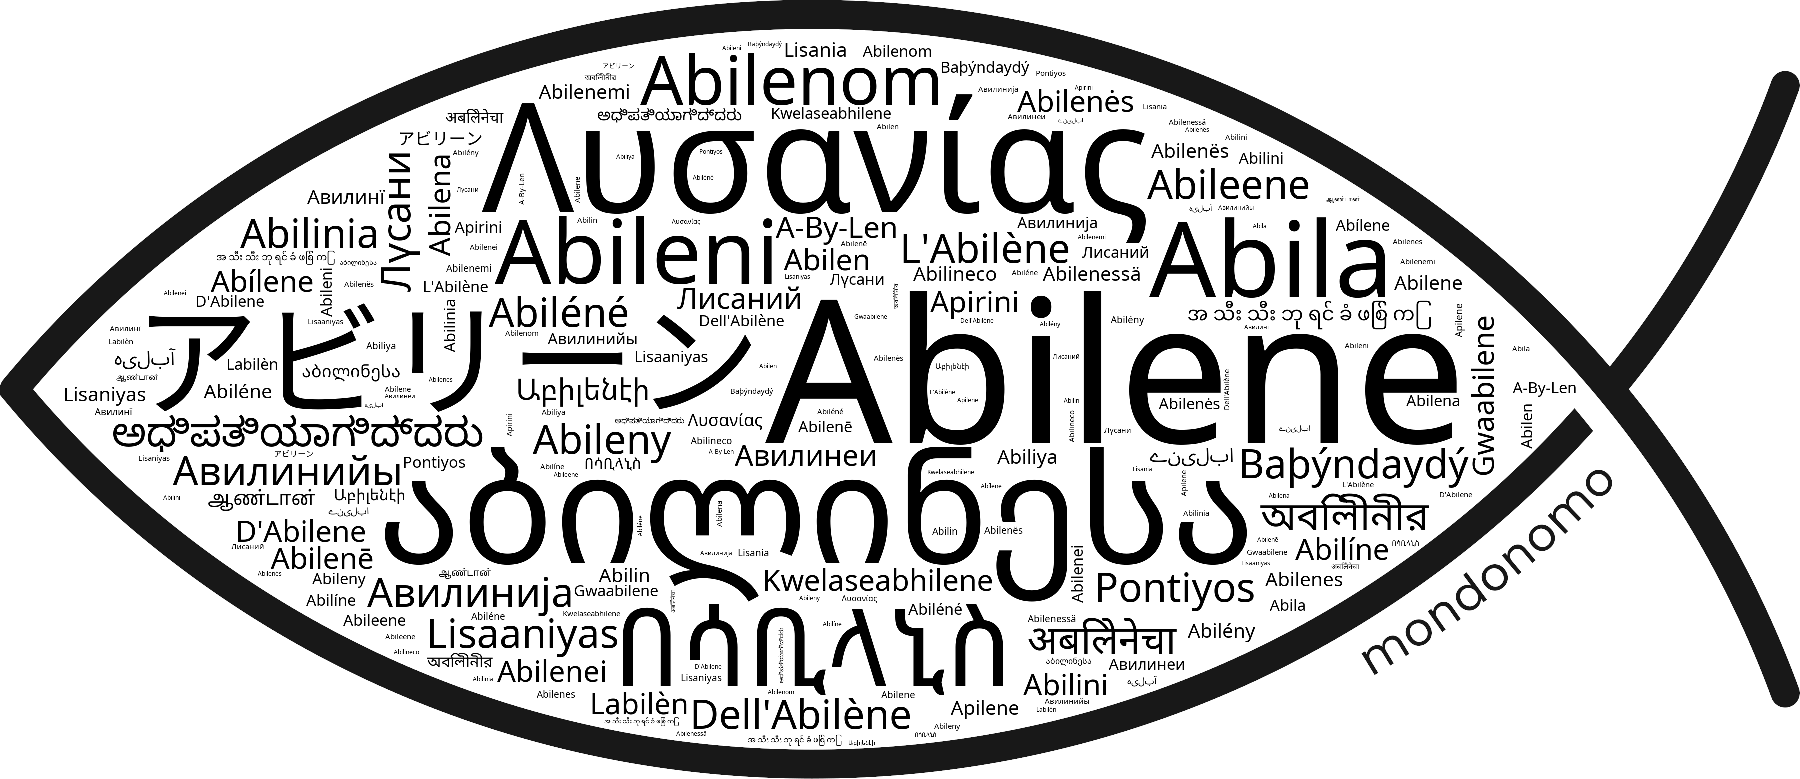 Name Abilene in the world's Bibles